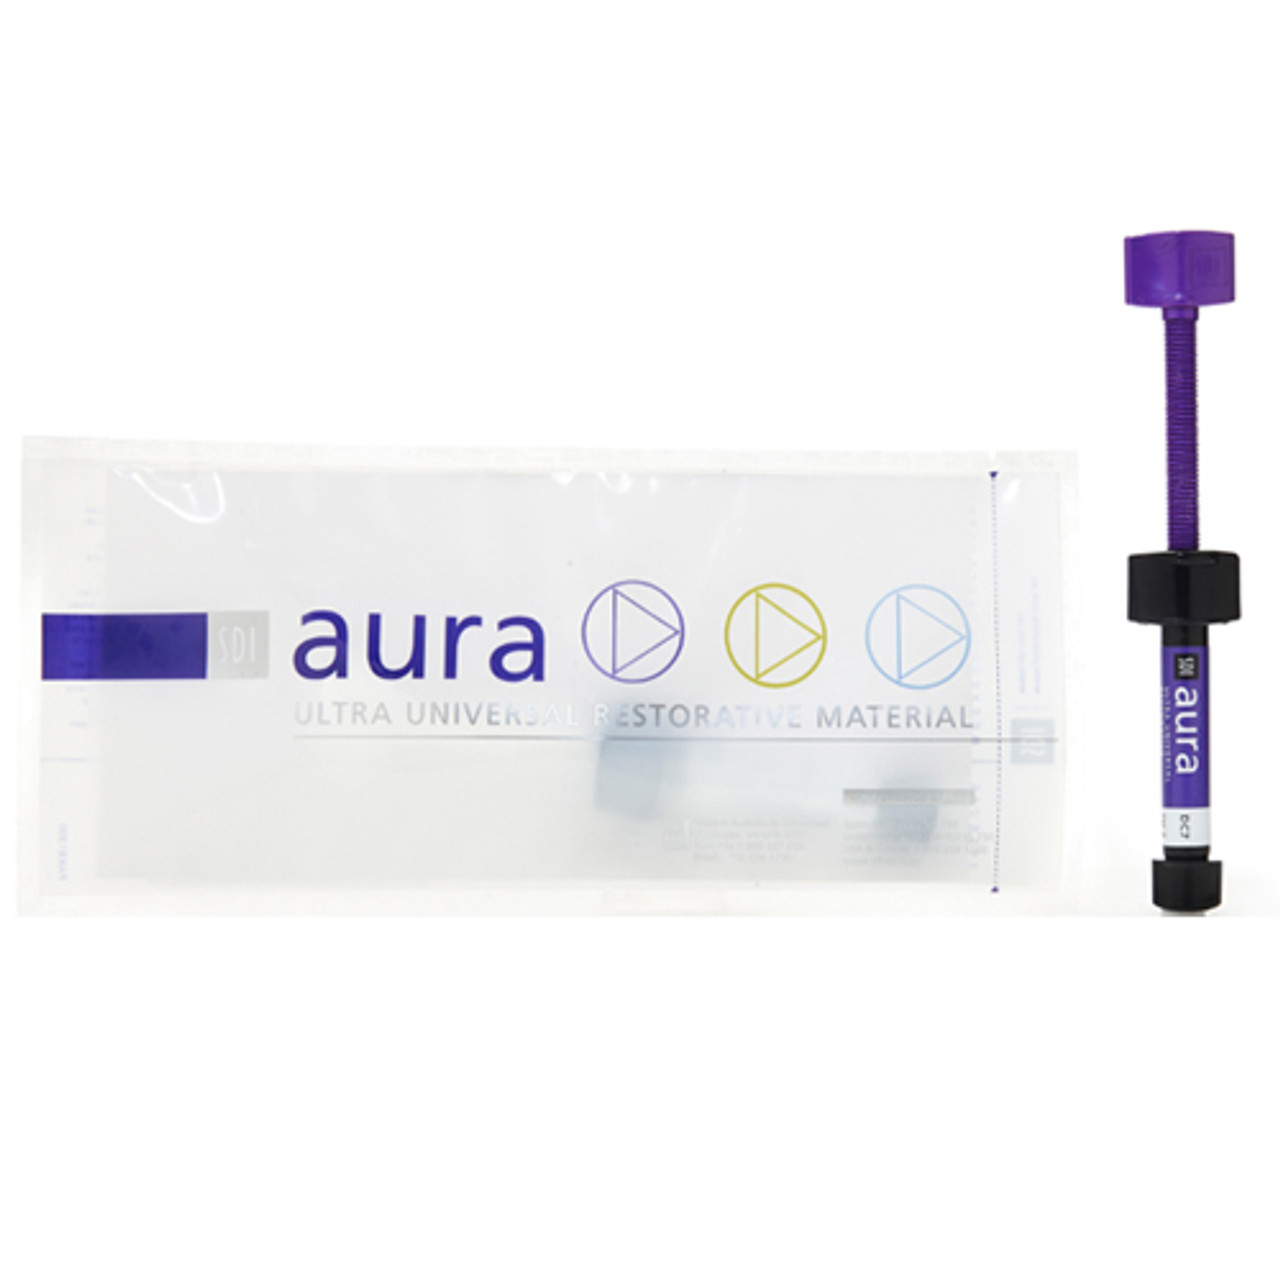 SDI Aura Easy Nano-Hybrid All Purpose Composite, eASY Syringe Refill 1 x 4g - AE4 8560023